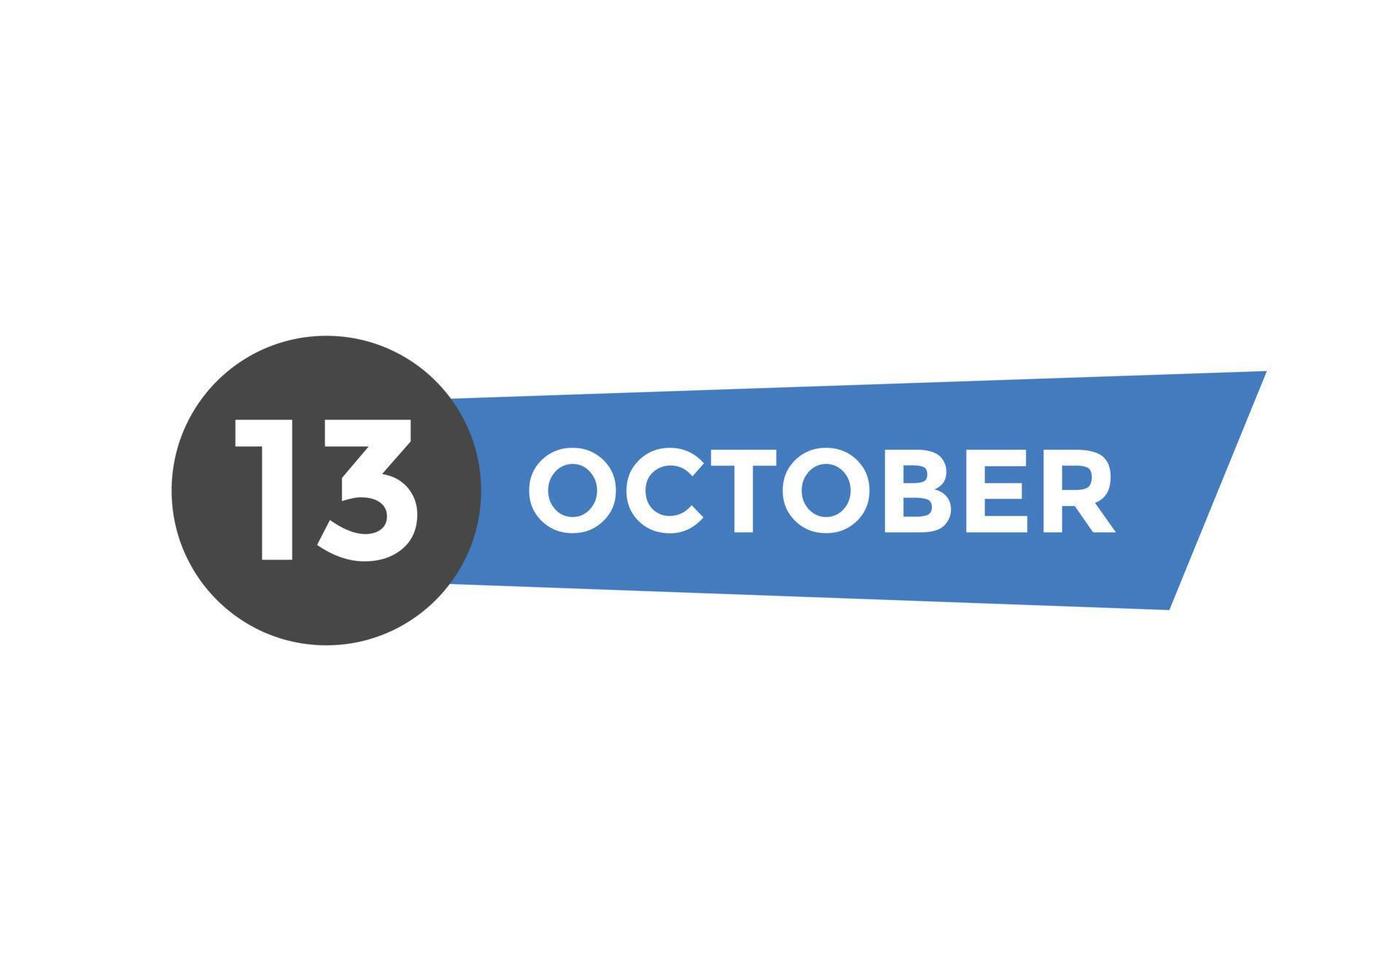 oktober 13 kalender påminnelse. 13: e oktober dagligen kalender ikon mall. kalender 13: e oktober ikon design mall. vektor illustration